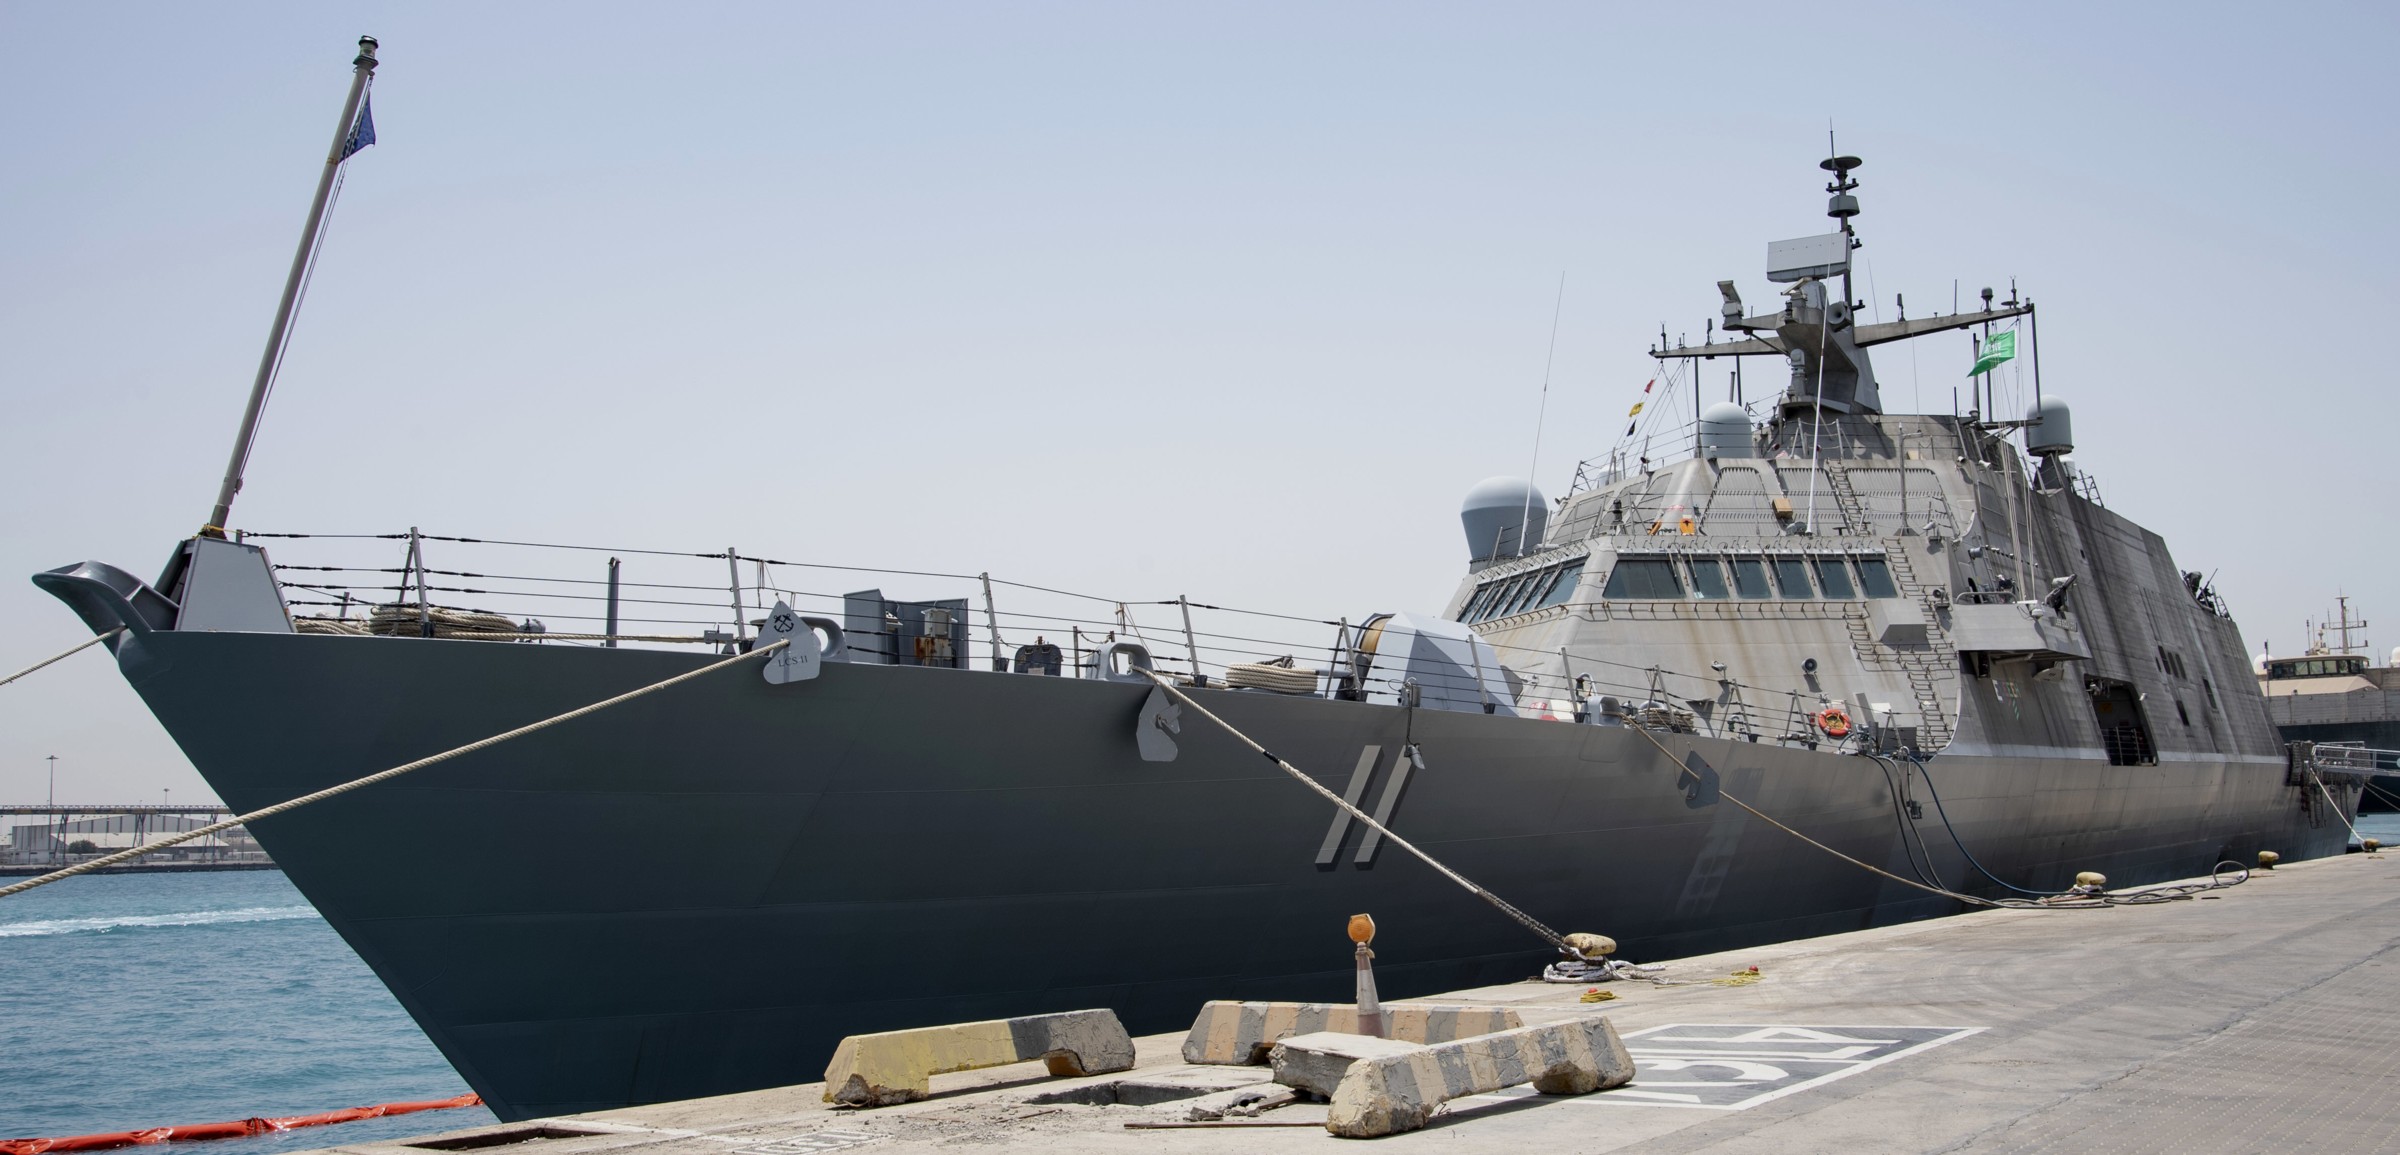 lcs-11 uss sioux city freedom class littoral combat ship us navy jeddah port saudi arabia 92